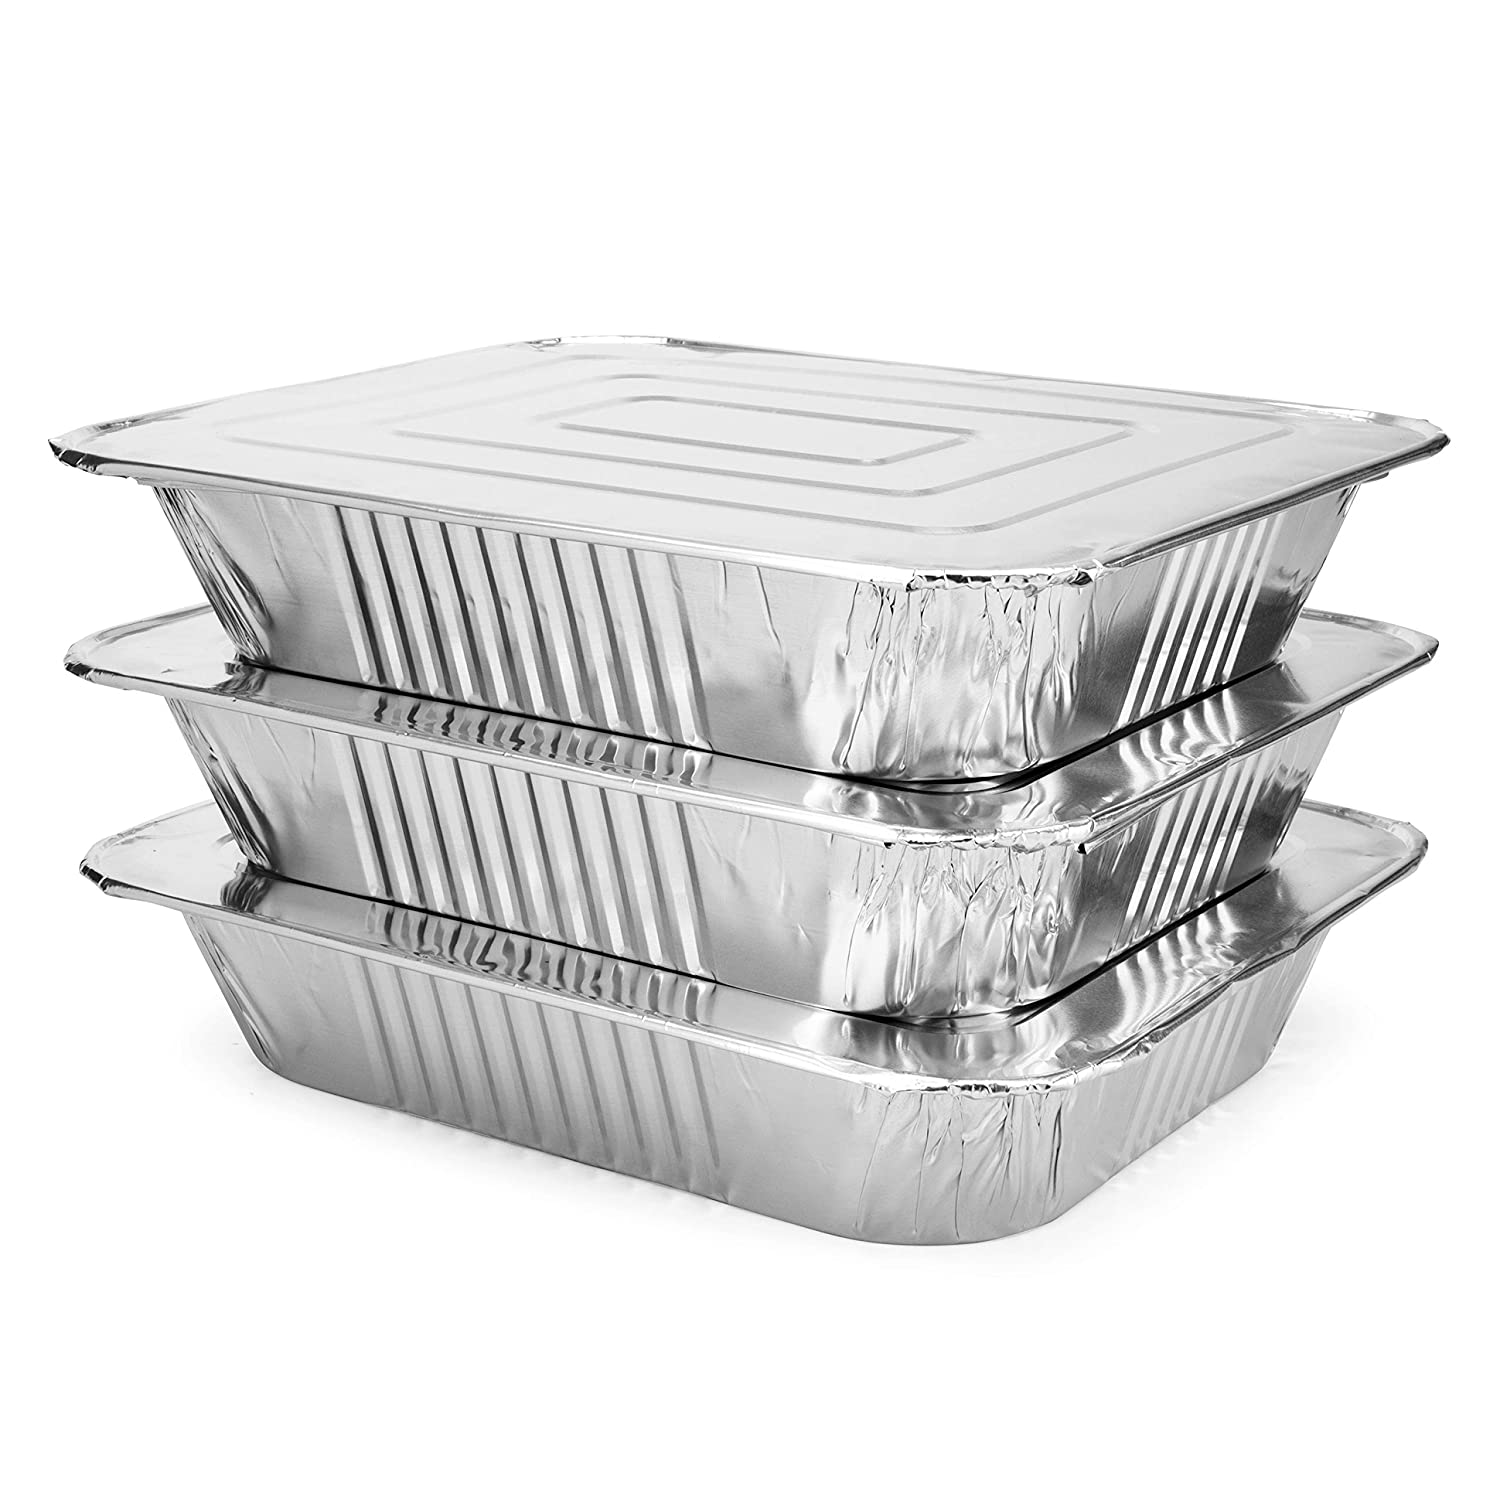 20 Pack Half Size Aluminum Pans with Lids, 9x13 Tin Food Storage